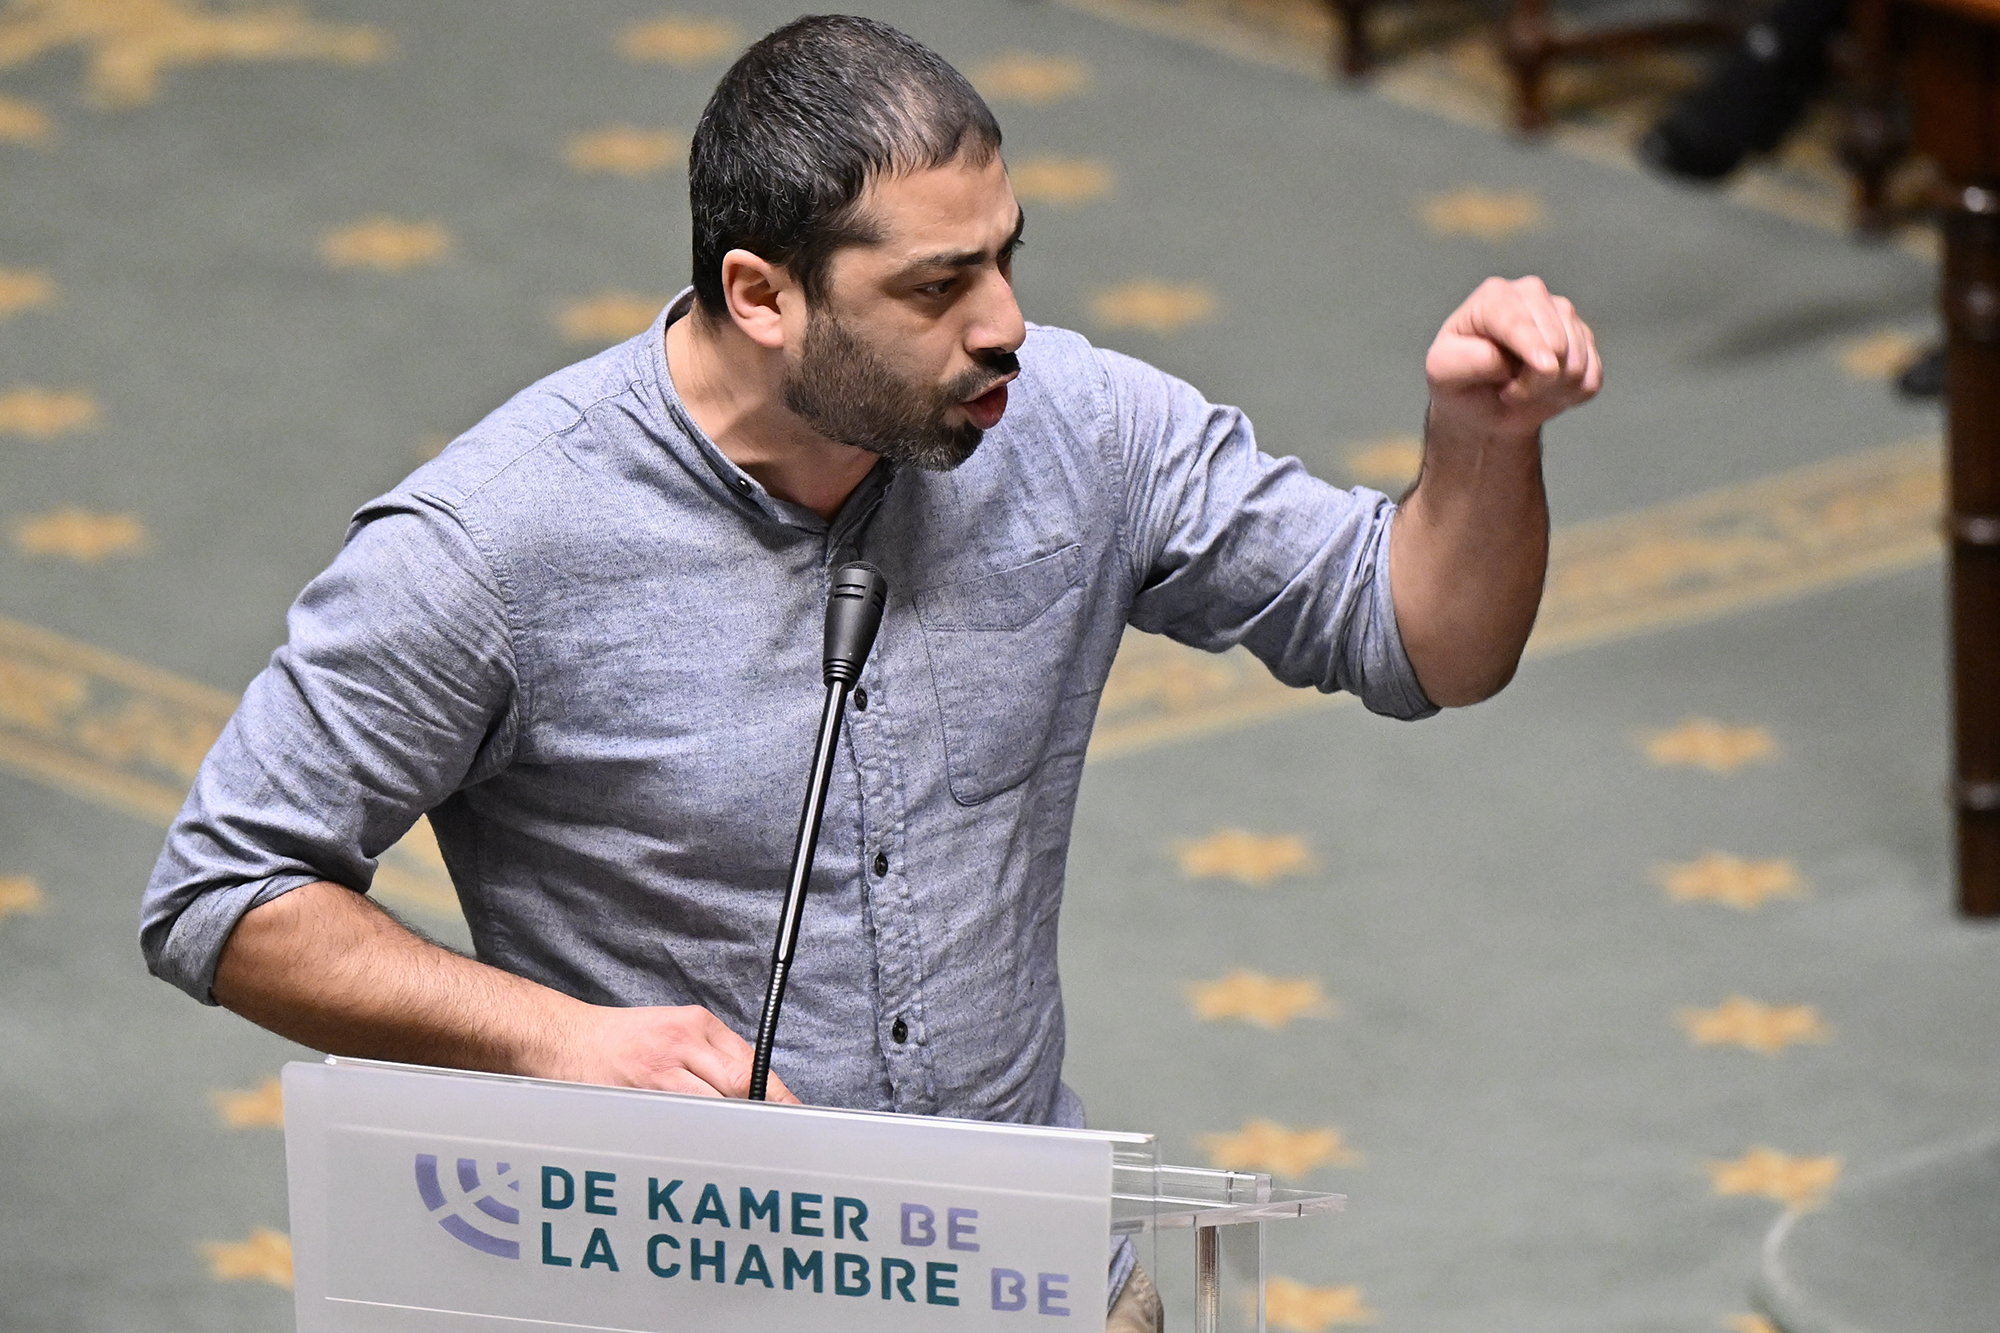 Der PTB-Abgeordnete Nabil Boukili am 29.2. in der Kammer (Bild: Eric Lalmand/Belga)